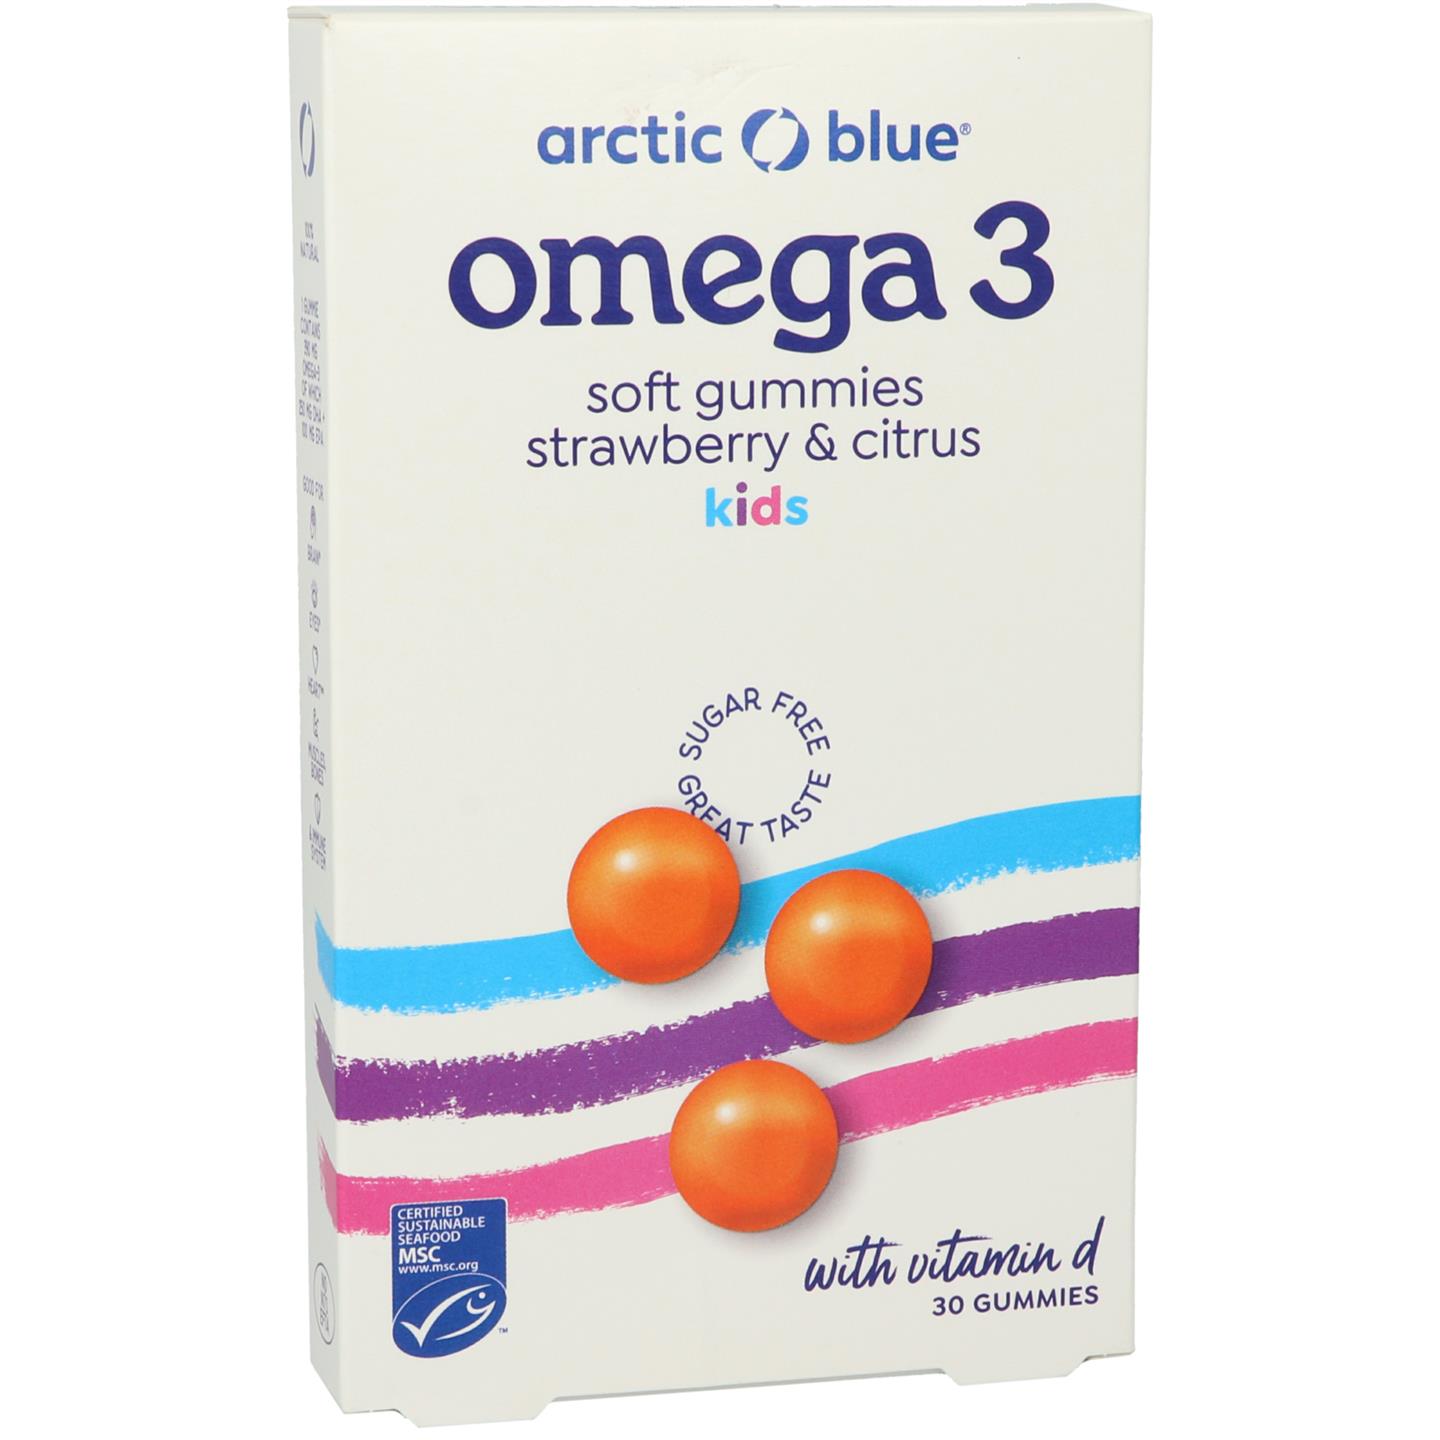 Omega 3 Soft Gummies Strawberry & Citrus Kids